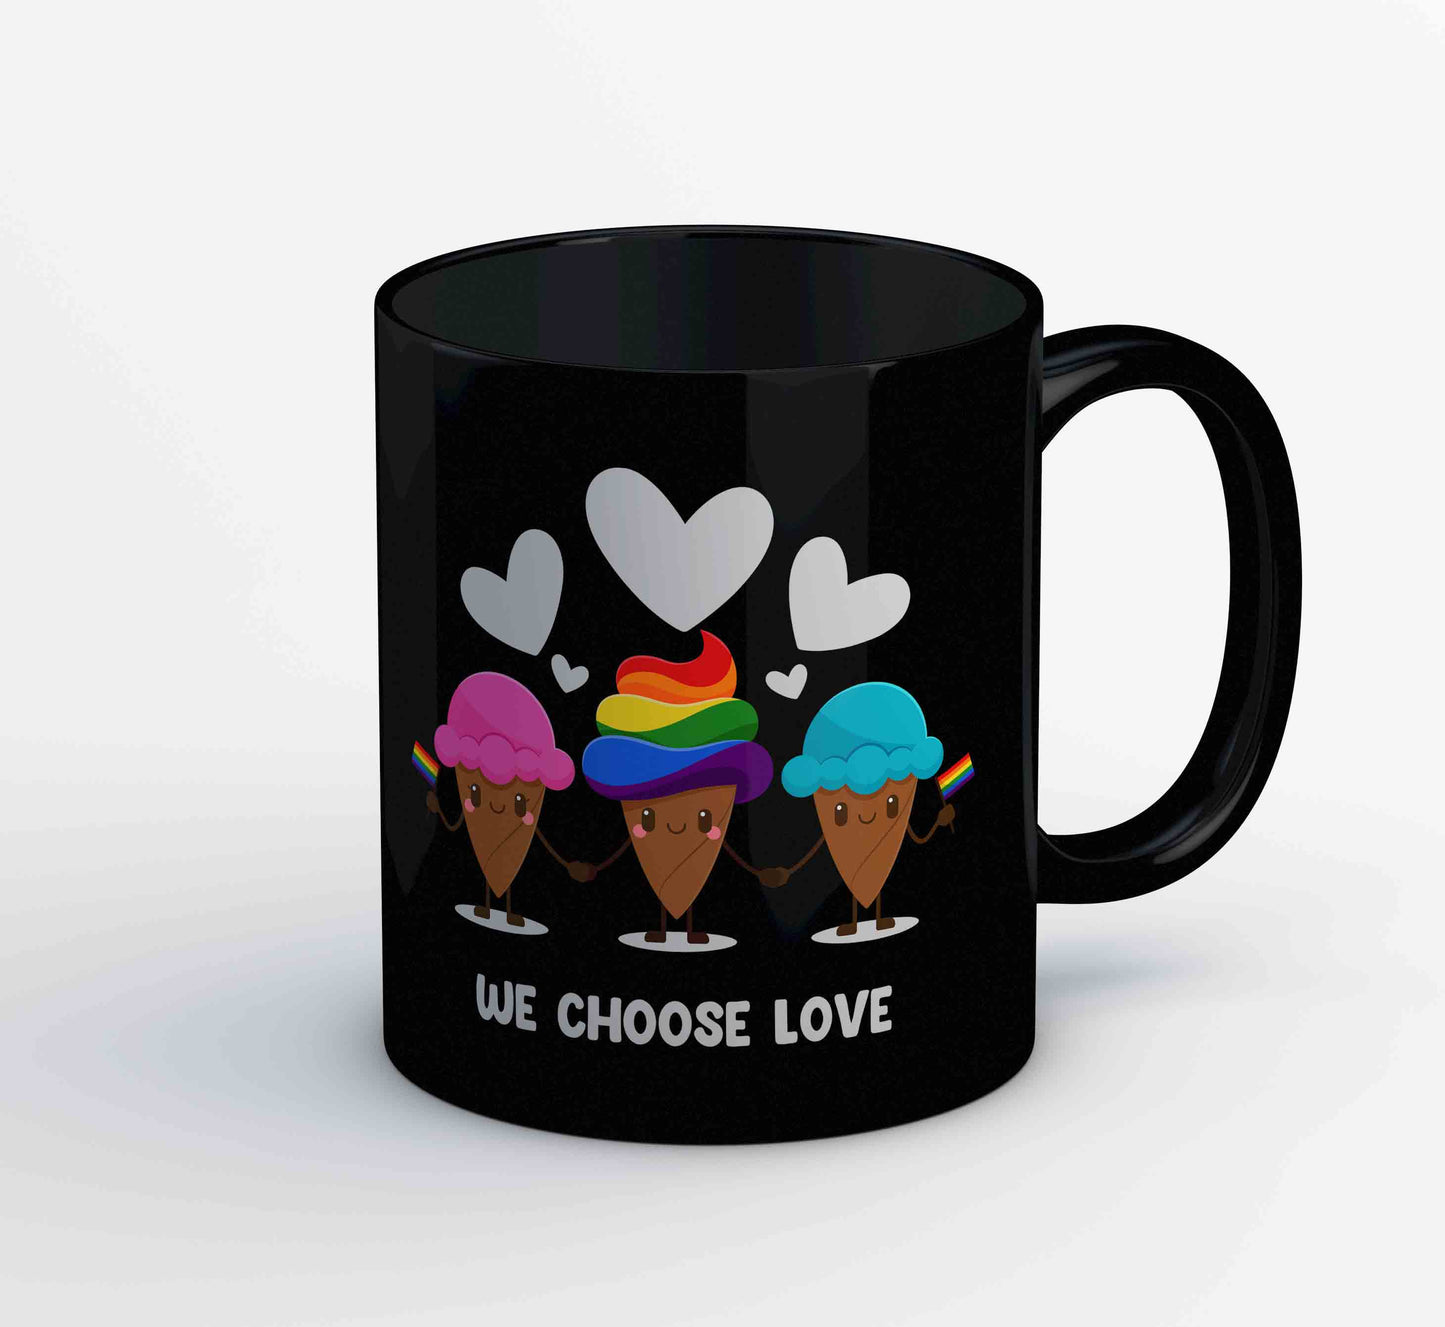 pride we choose love mug coffee ceramic printed graphic stylish buy online india the banyan tee tbt men women girls boys unisex  - lgbtqia+